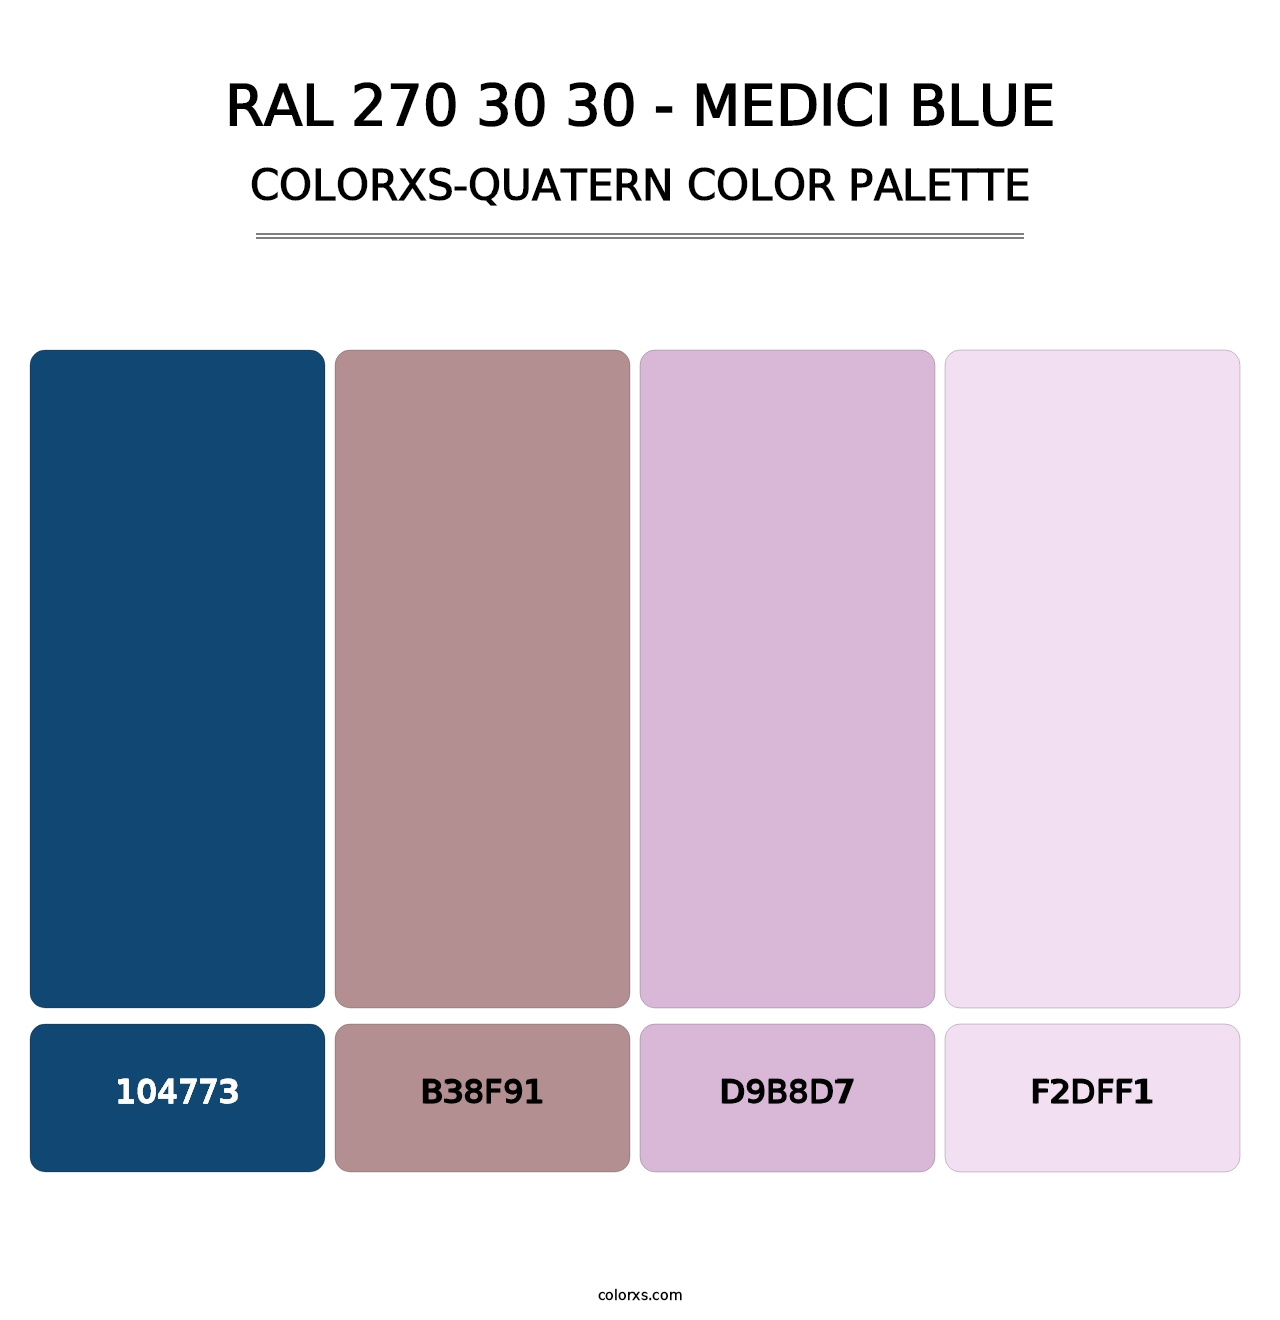 RAL 270 30 30 - Medici Blue - Colorxs Quatern Palette